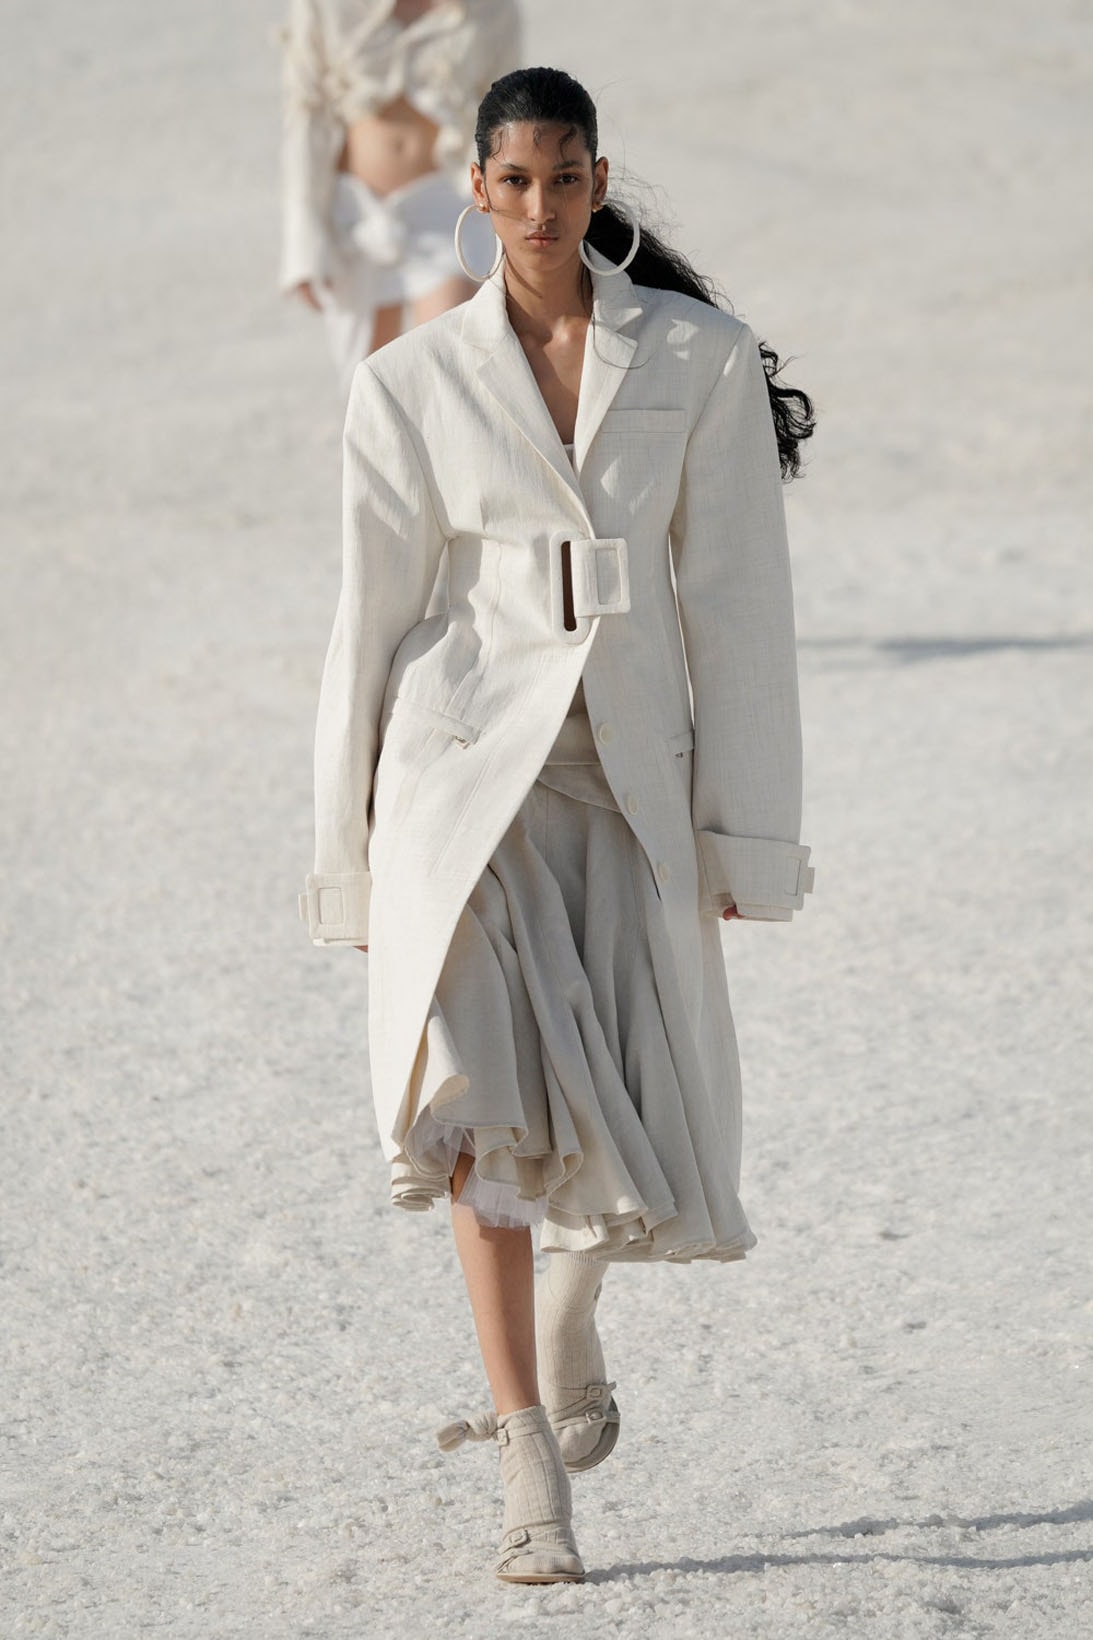 Jacquemus “Le Papier” Fall 2022 Presents a Vision of Tonal Elegance Fashion